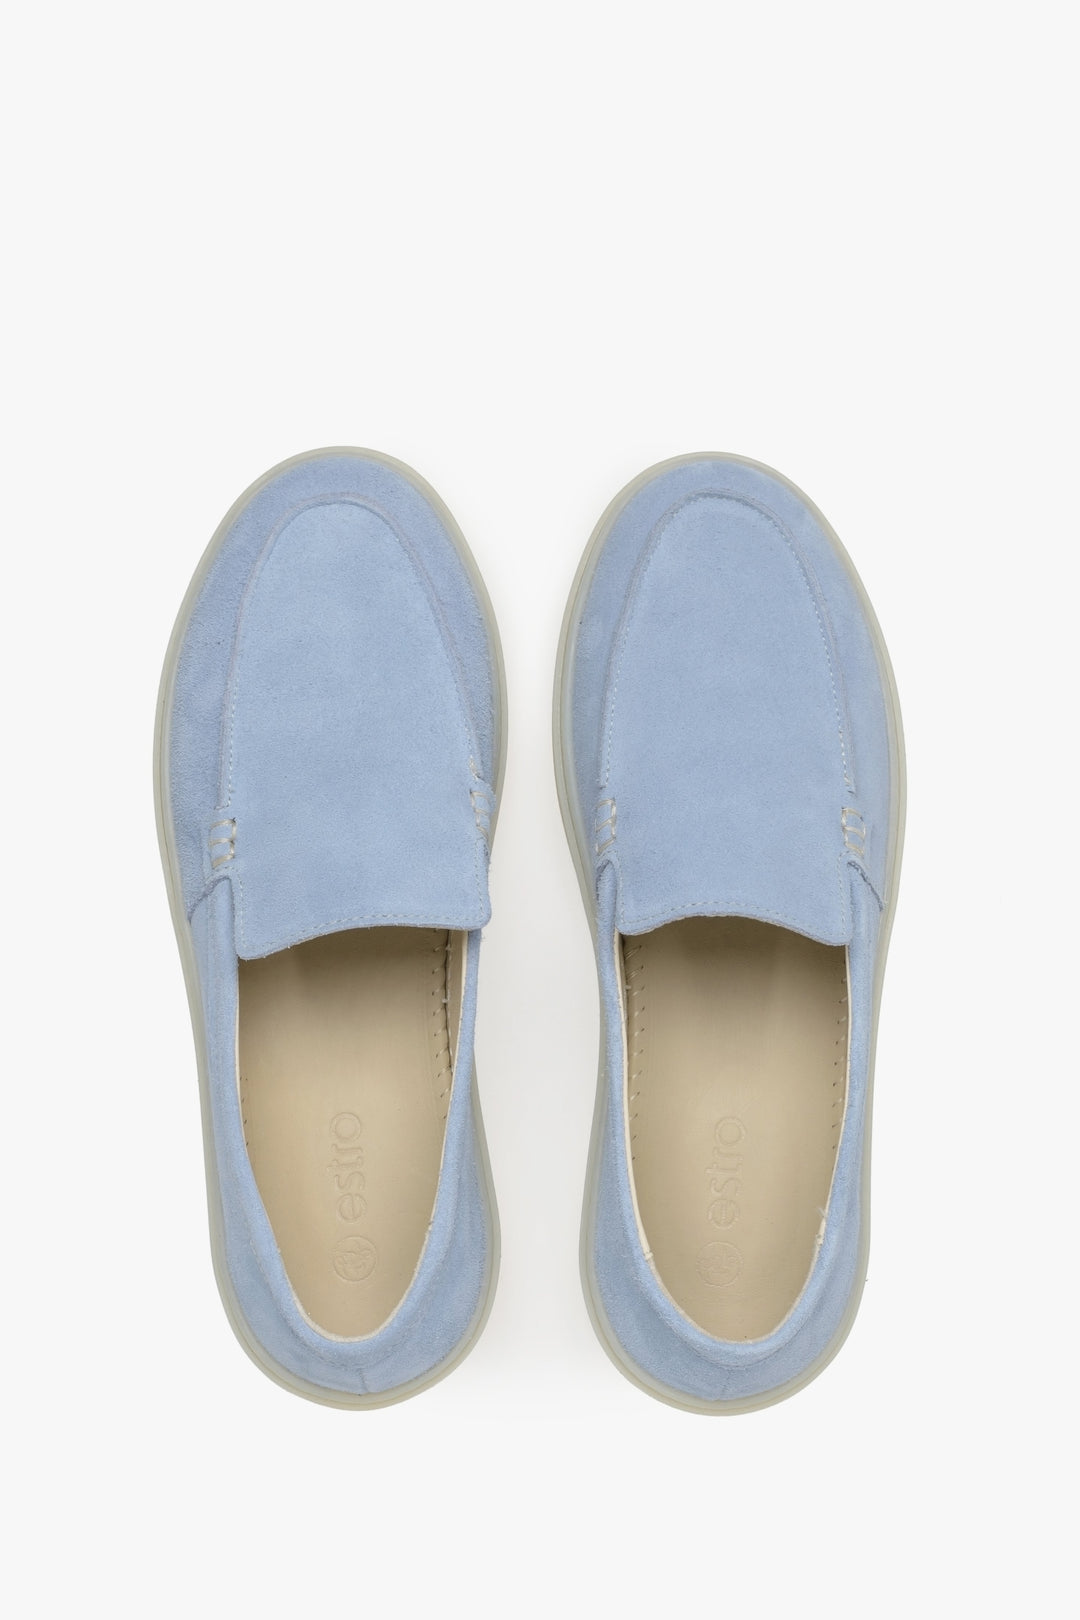 Women's blue loafers made of premium Italian velour.